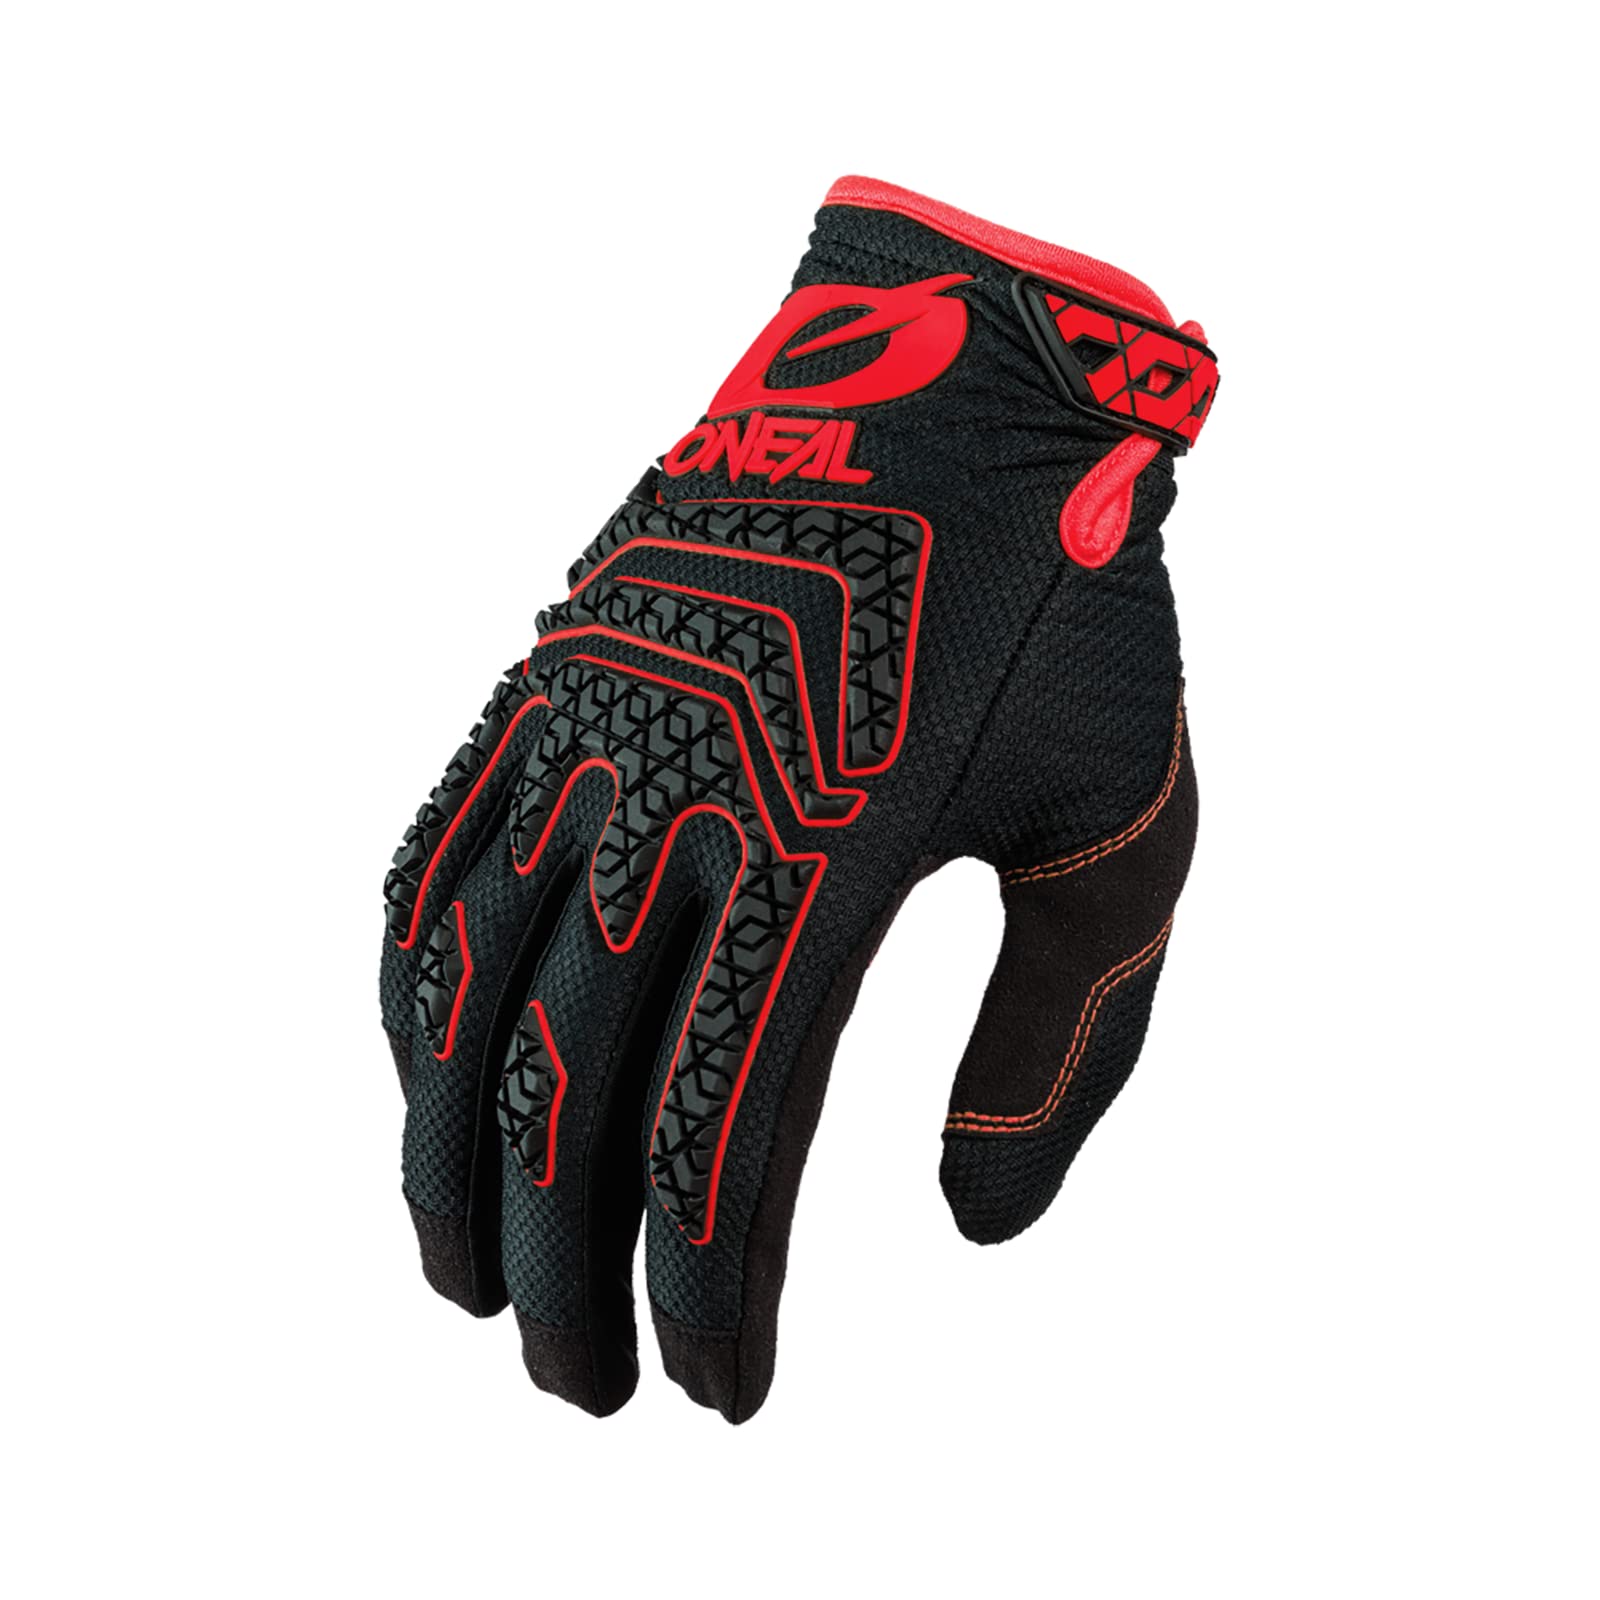 O'NEAL | Fahrrad- & Motocross-Handschuhe | MX MTB DH FR Downhill Freeride | Langlebige, Flexible Materialien, Silikonprint für Grip | Sniper Elite Glove | Erwachsene | Schwarz Rot | Größe XXL von O'NEAL